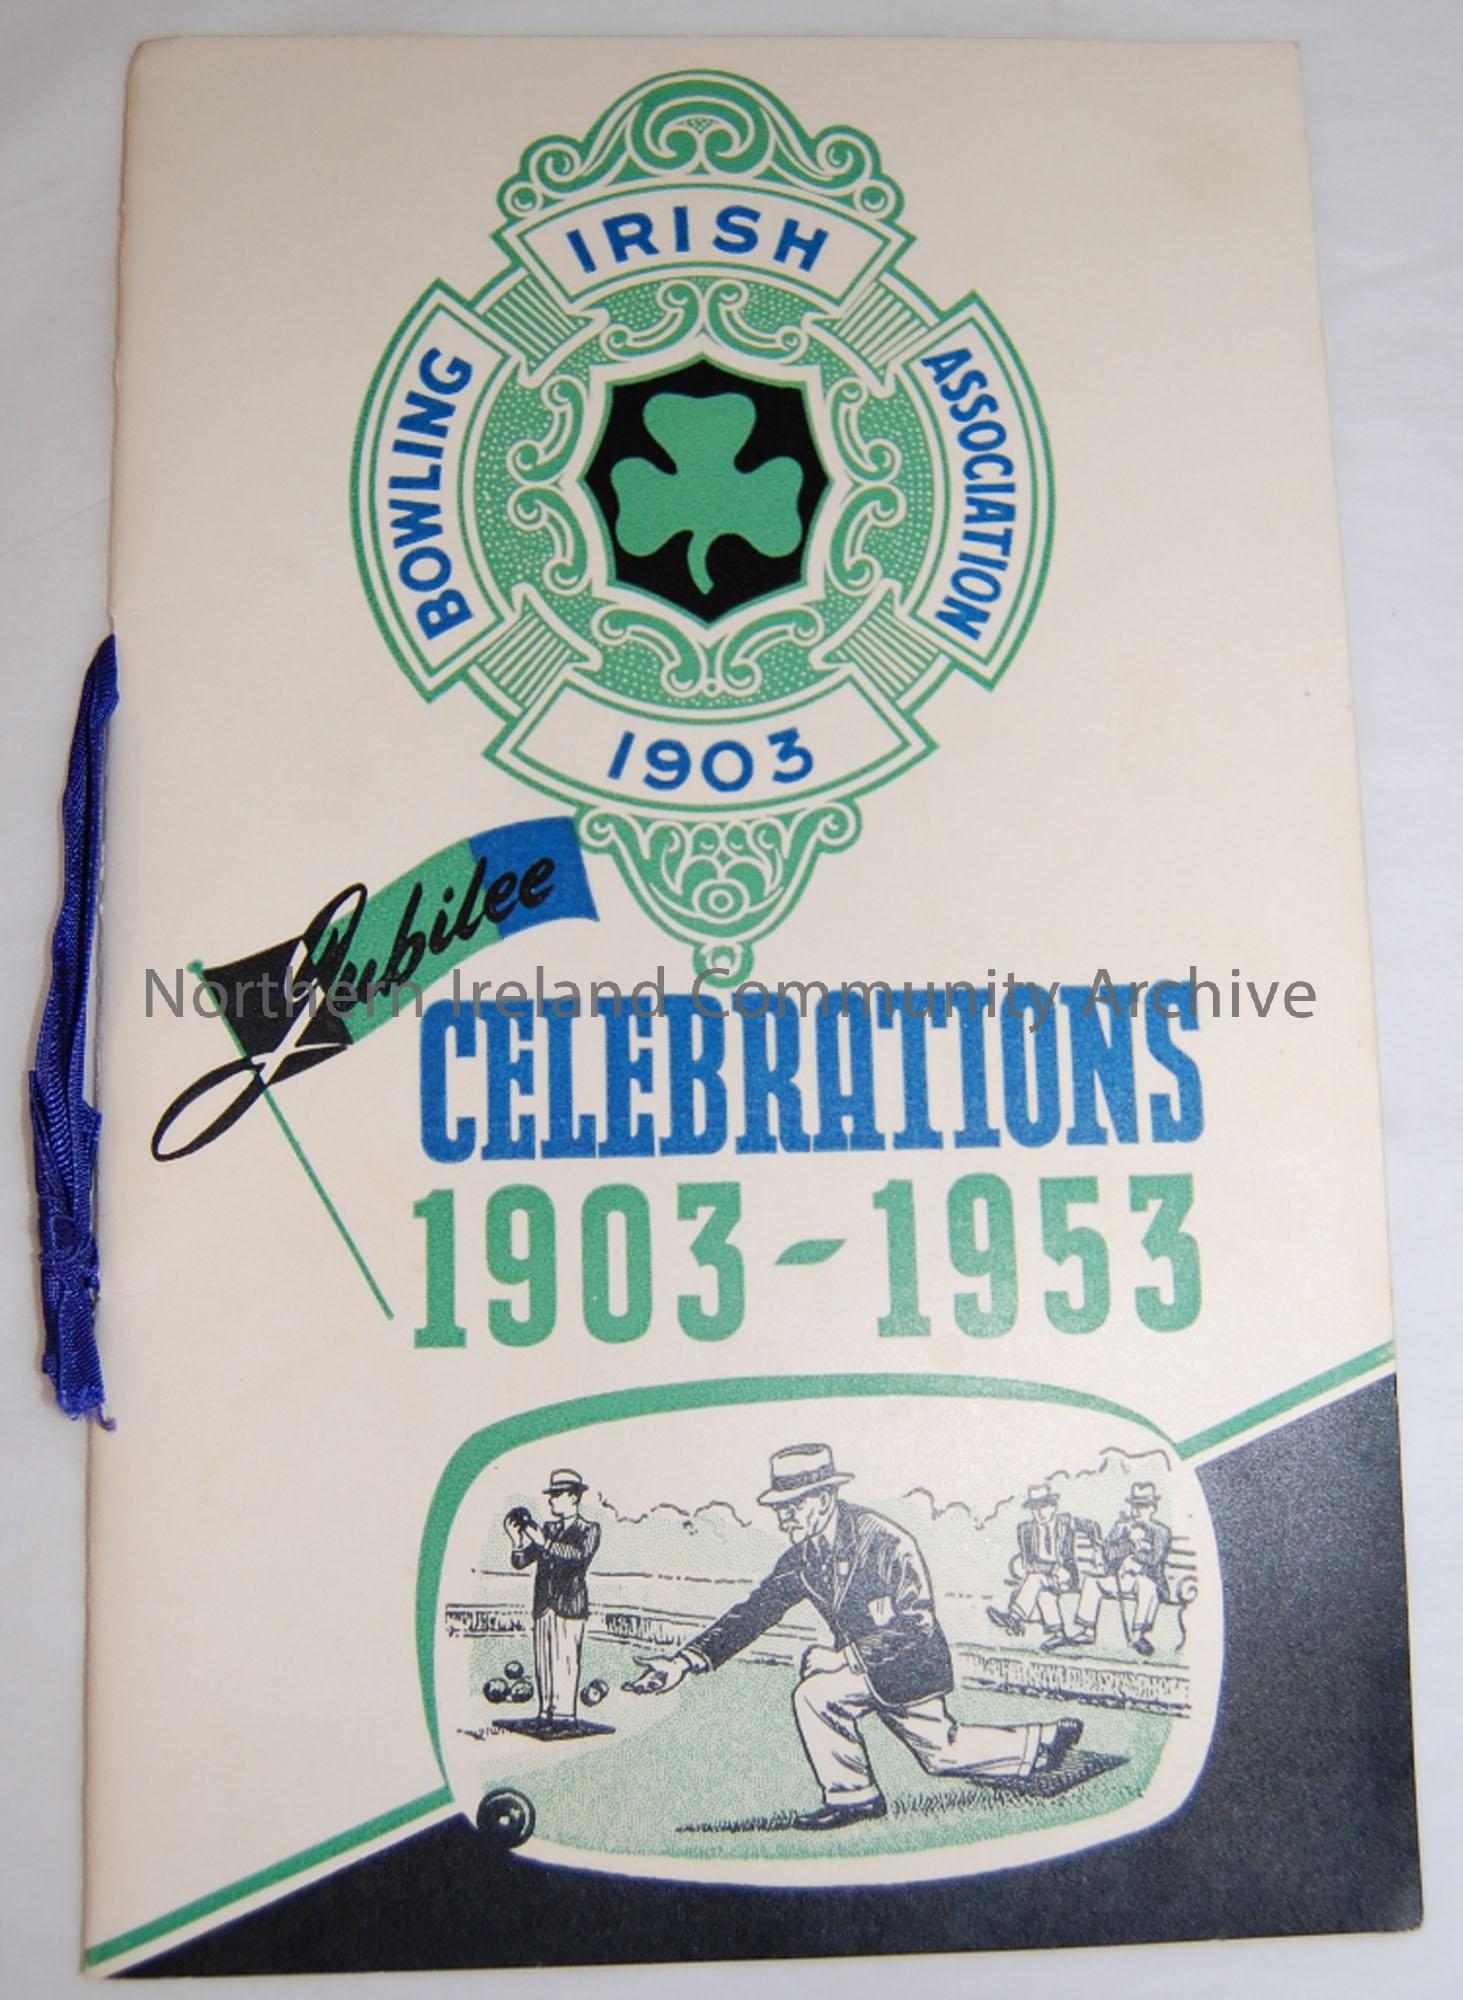 Irish Bowling Association Jubilee Celebrations 1903-1953. Illustrations include logo and people bowling